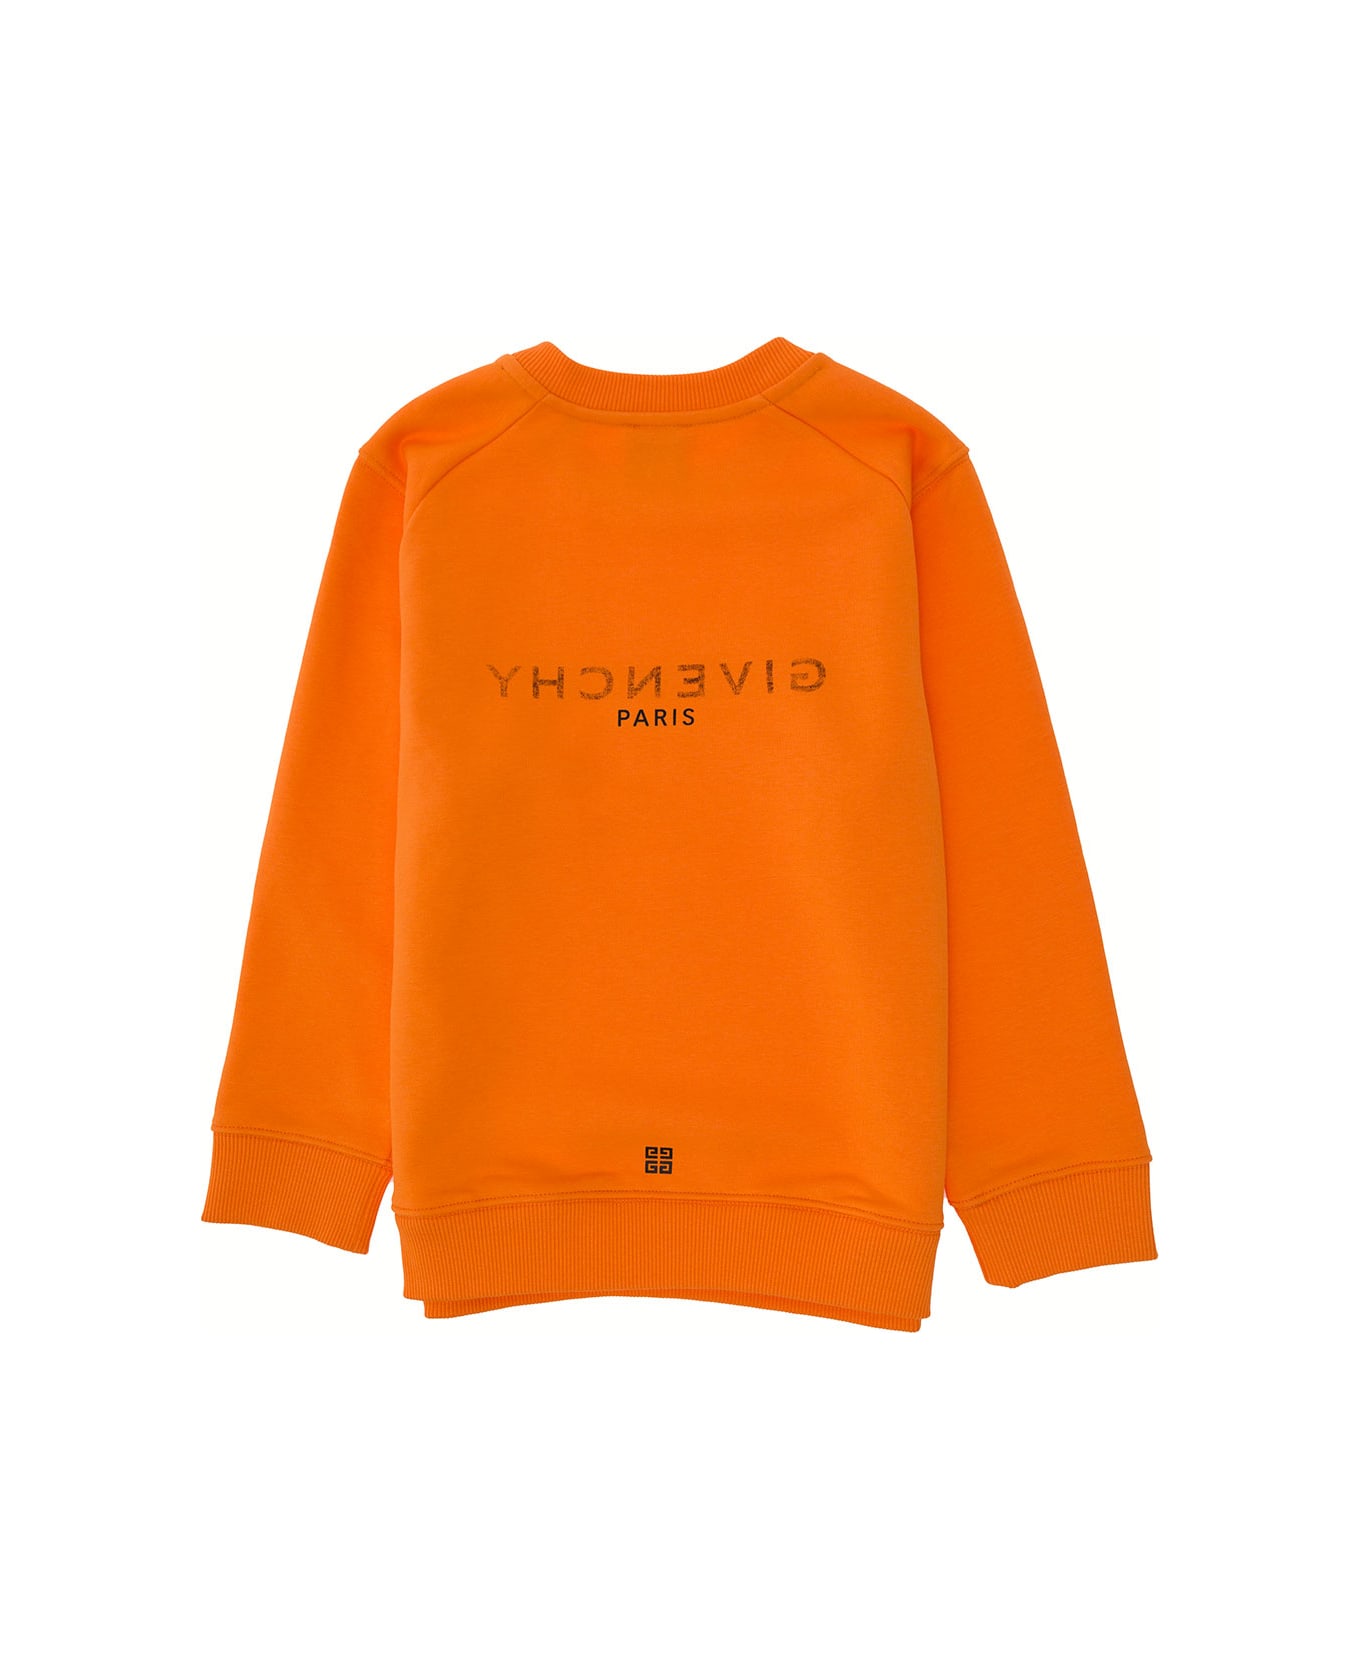 Givenchy Boy Blend Cotton Orange Sweatshirt With Logo Print - Rosso